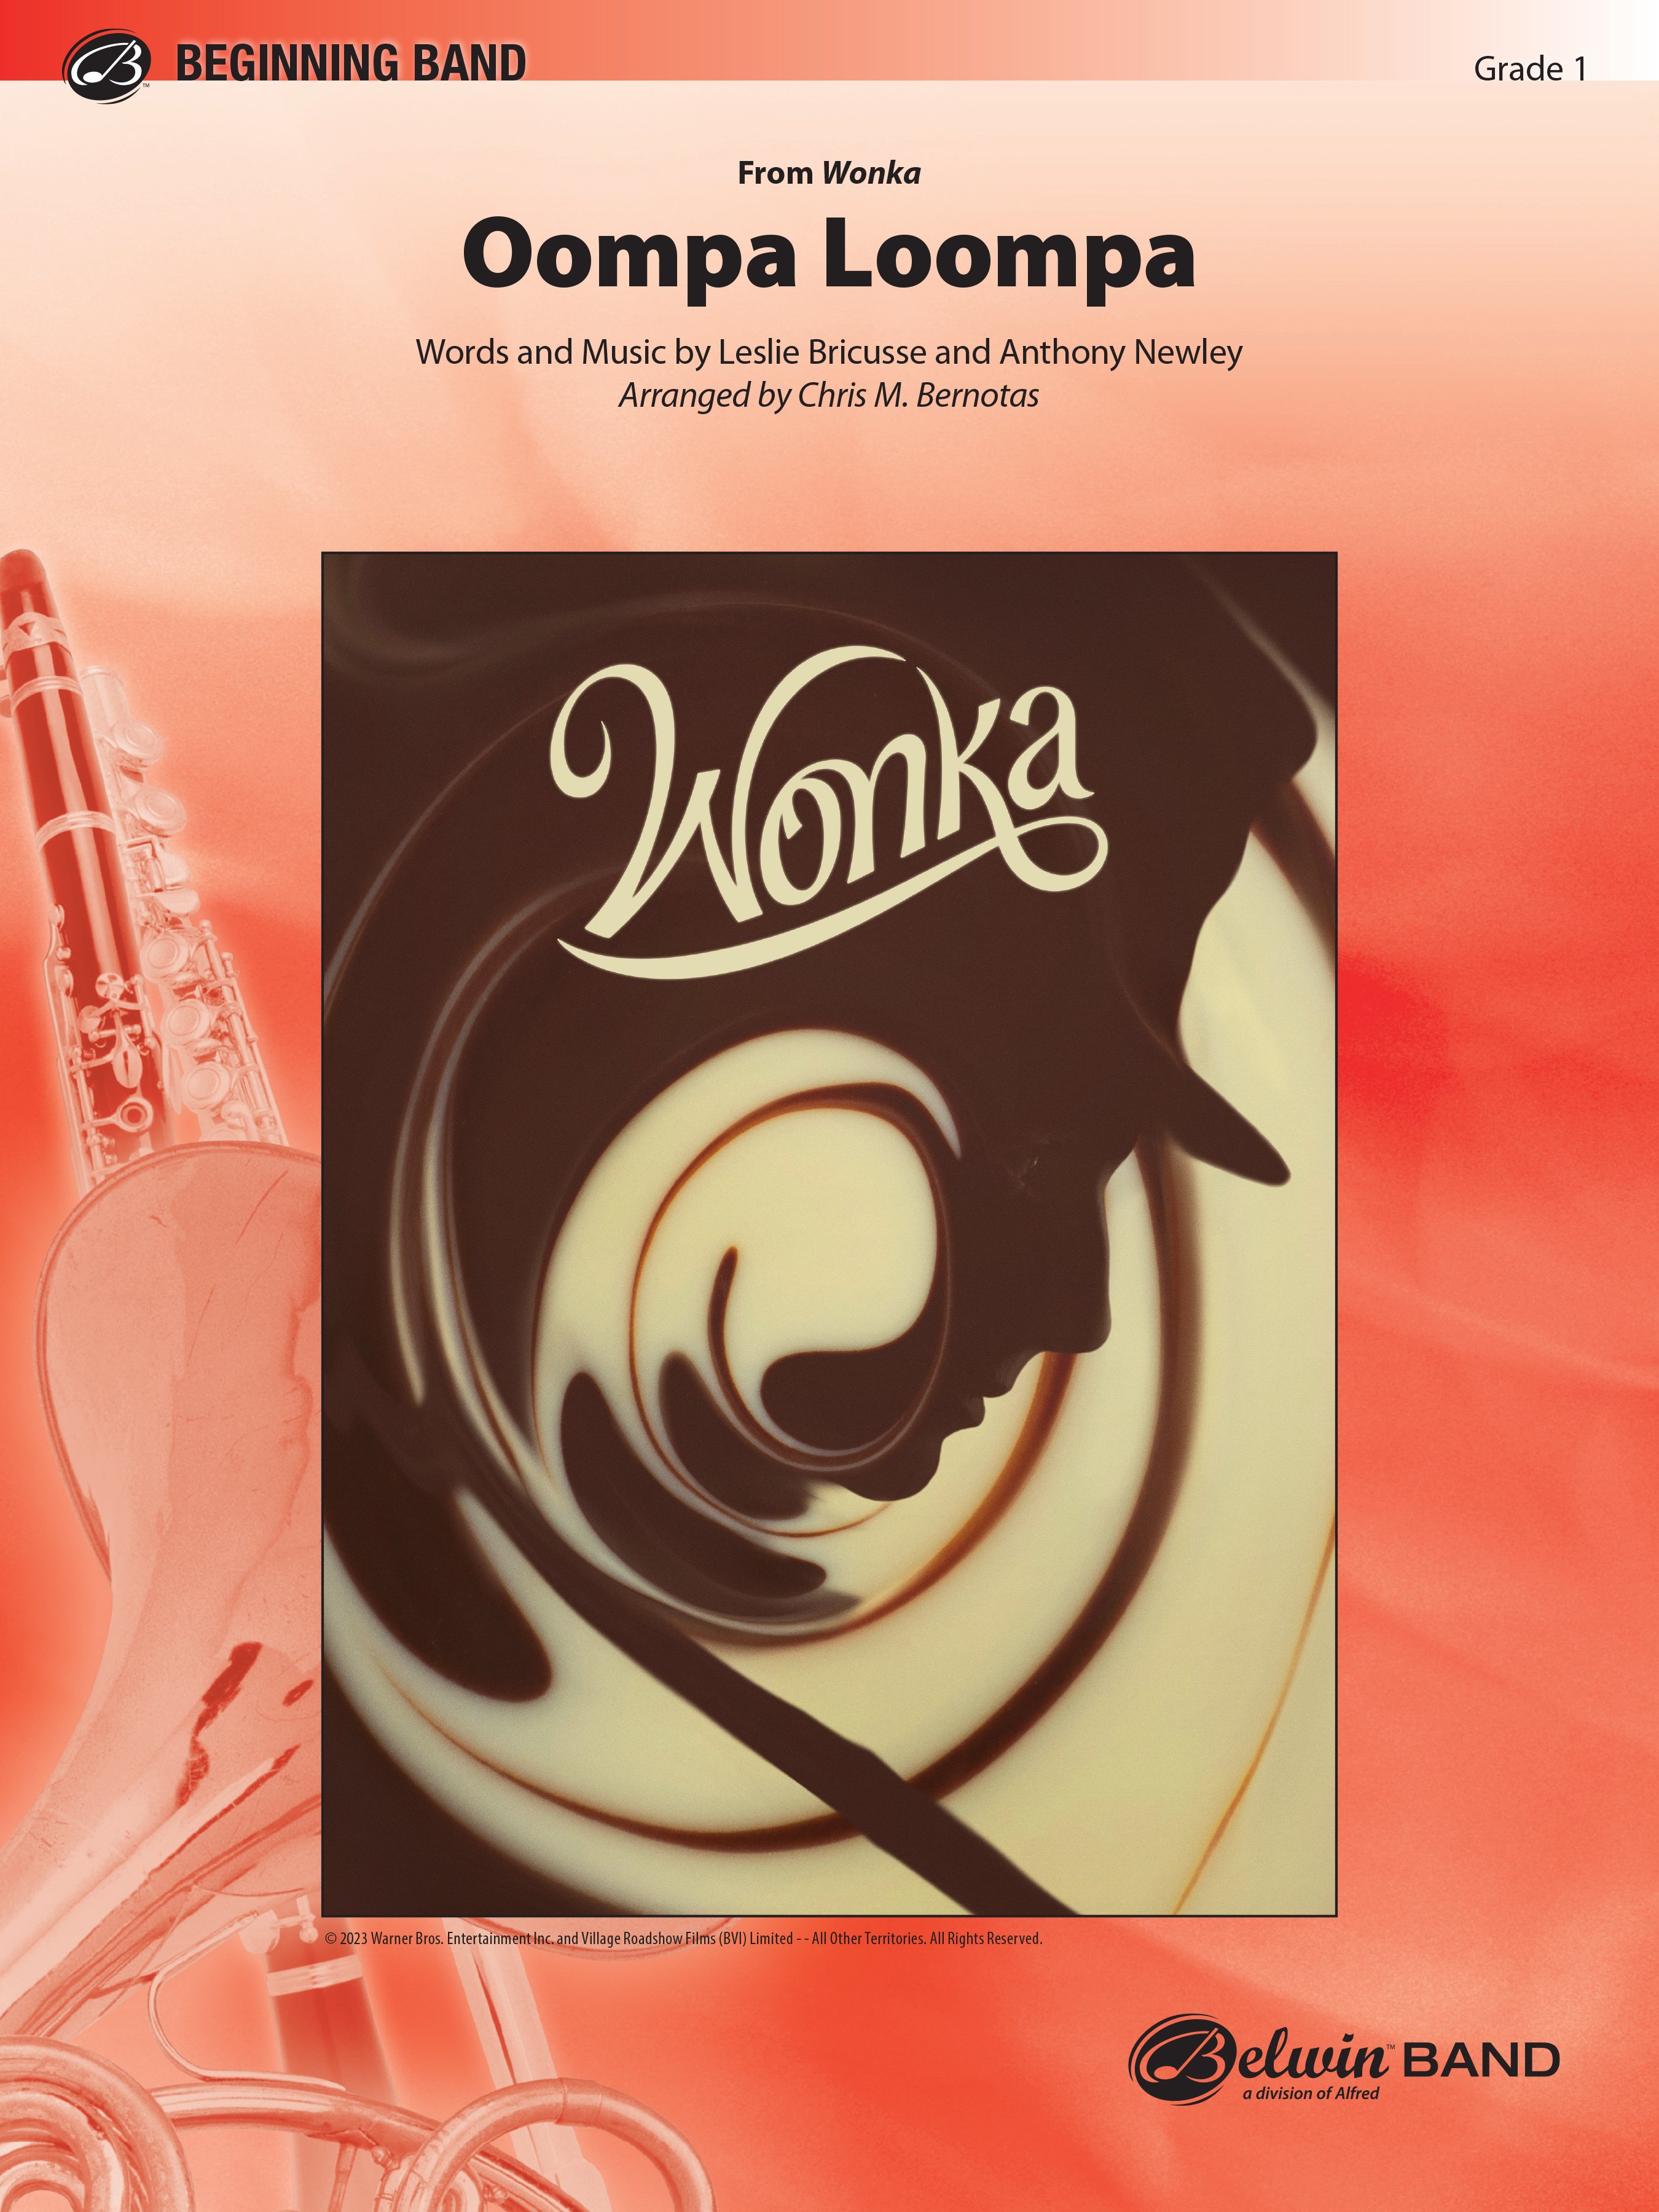 Oompa Loompa band sheet music cover